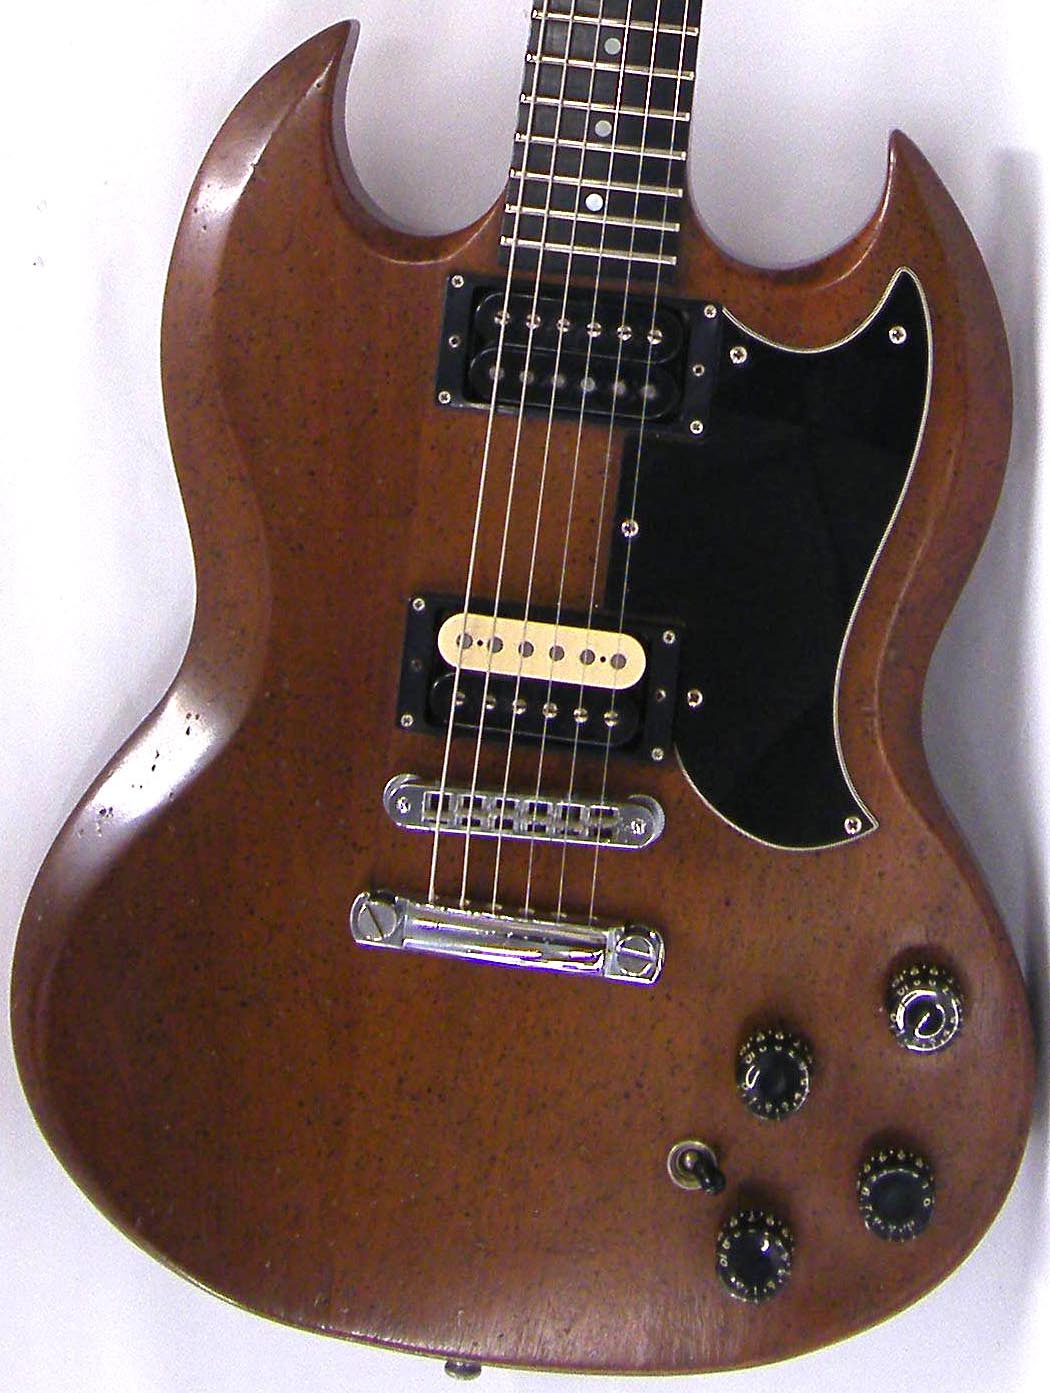 KAISH American Standard SG Guitar Full Face Pickguard fits USA Gibson SG Special Guitar Black White Shell 